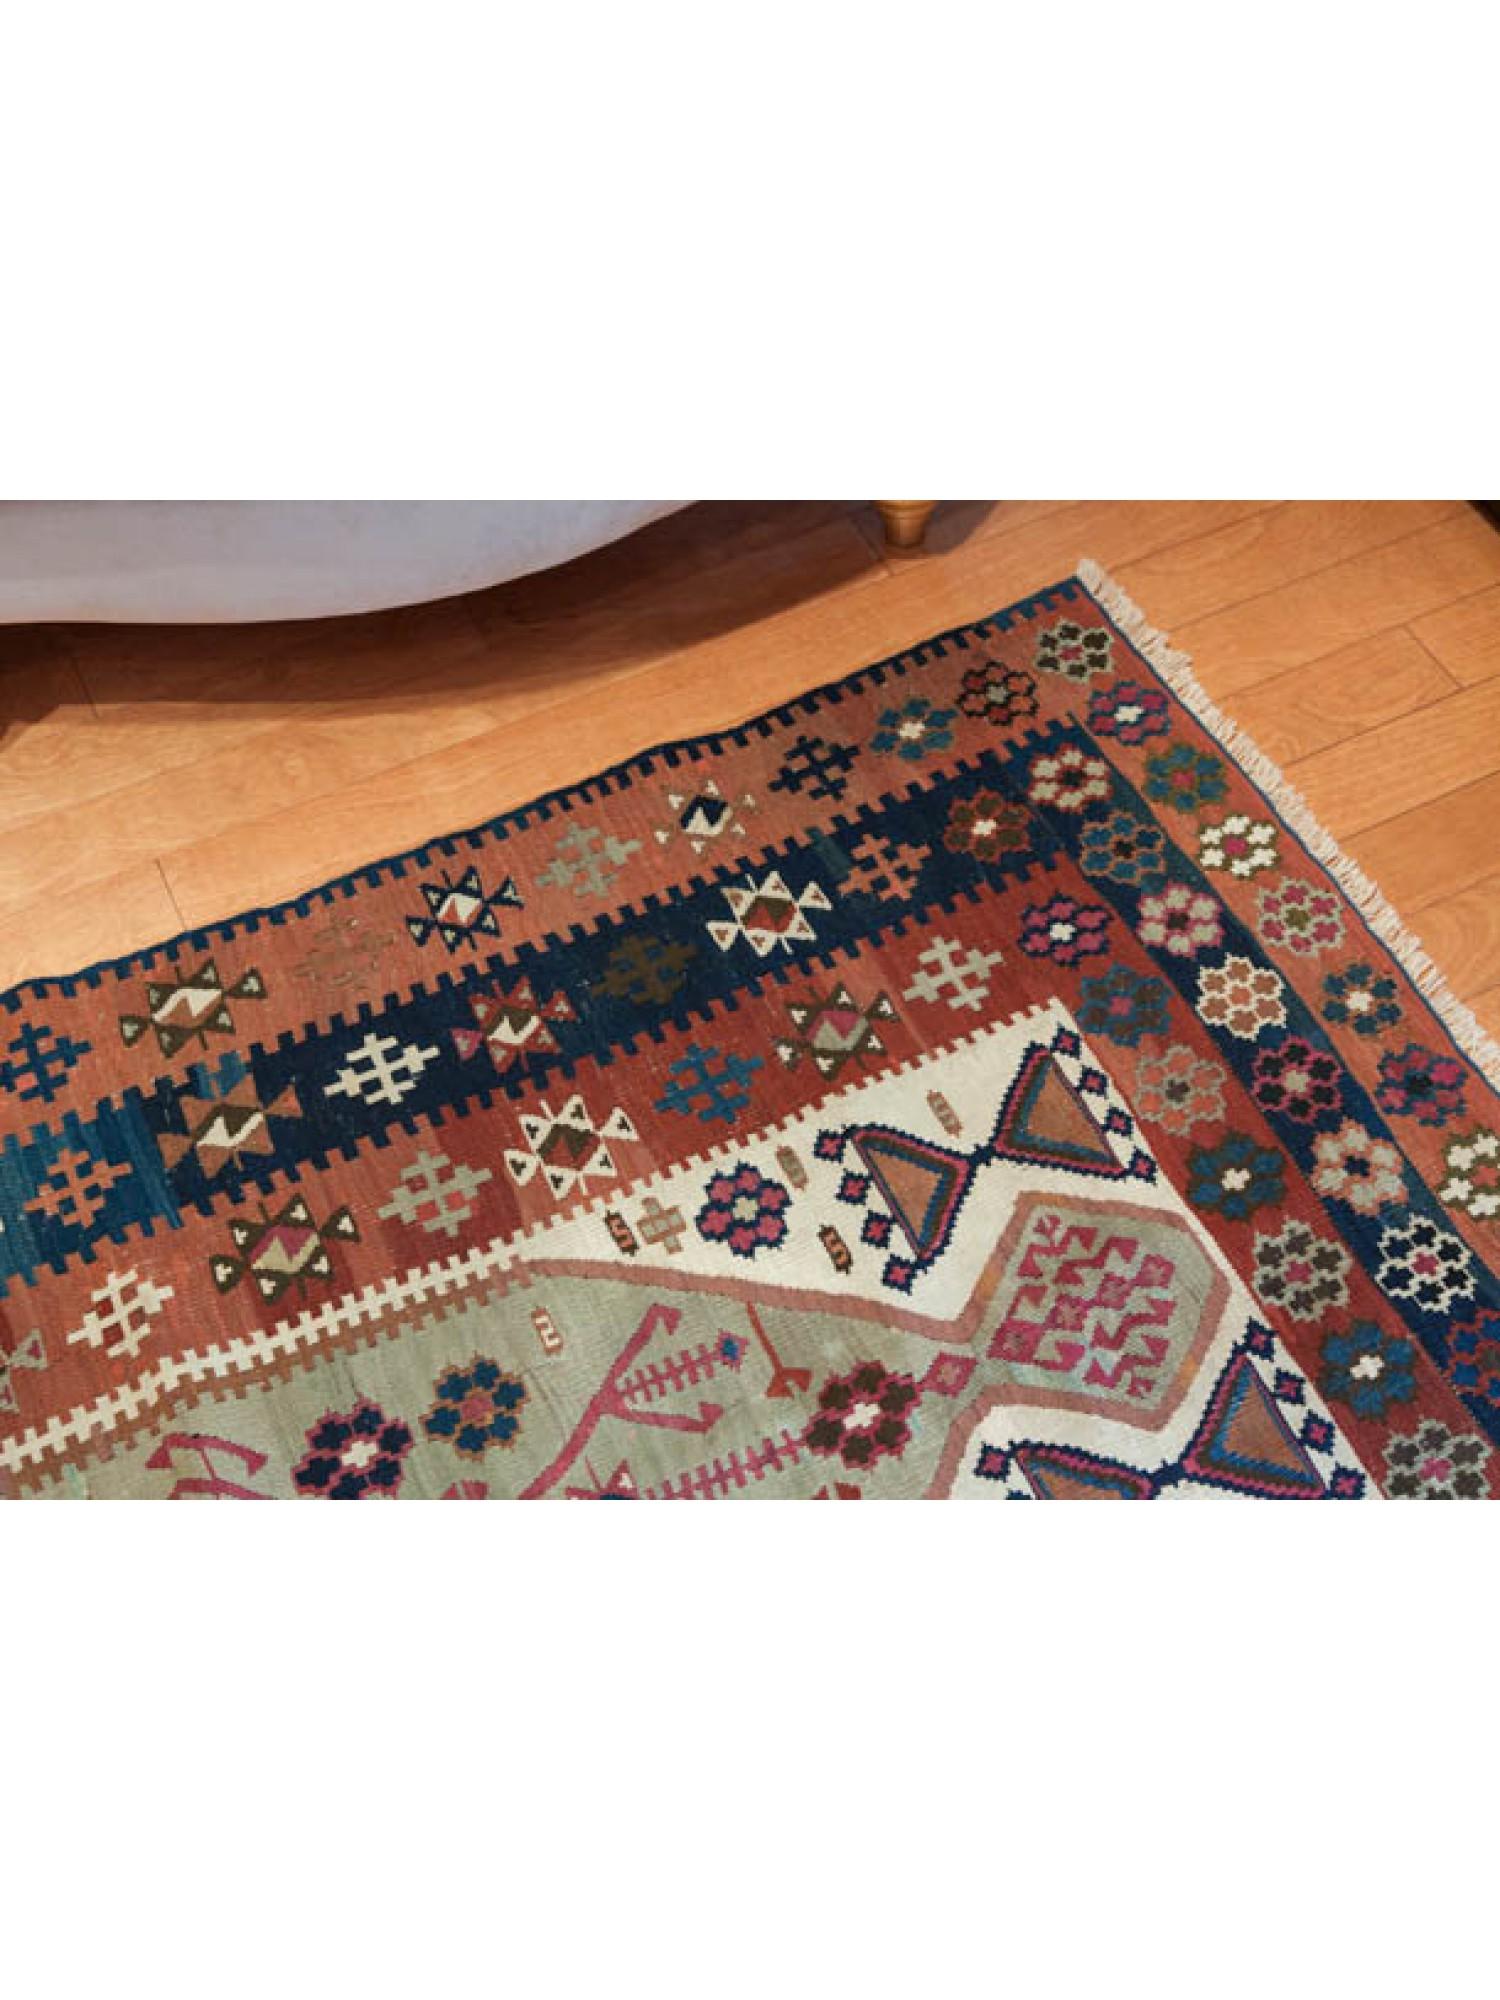 Vegetable Dyed Antique Reyhanli Kilim, Anatolian Rug Turkish Carpet For Sale